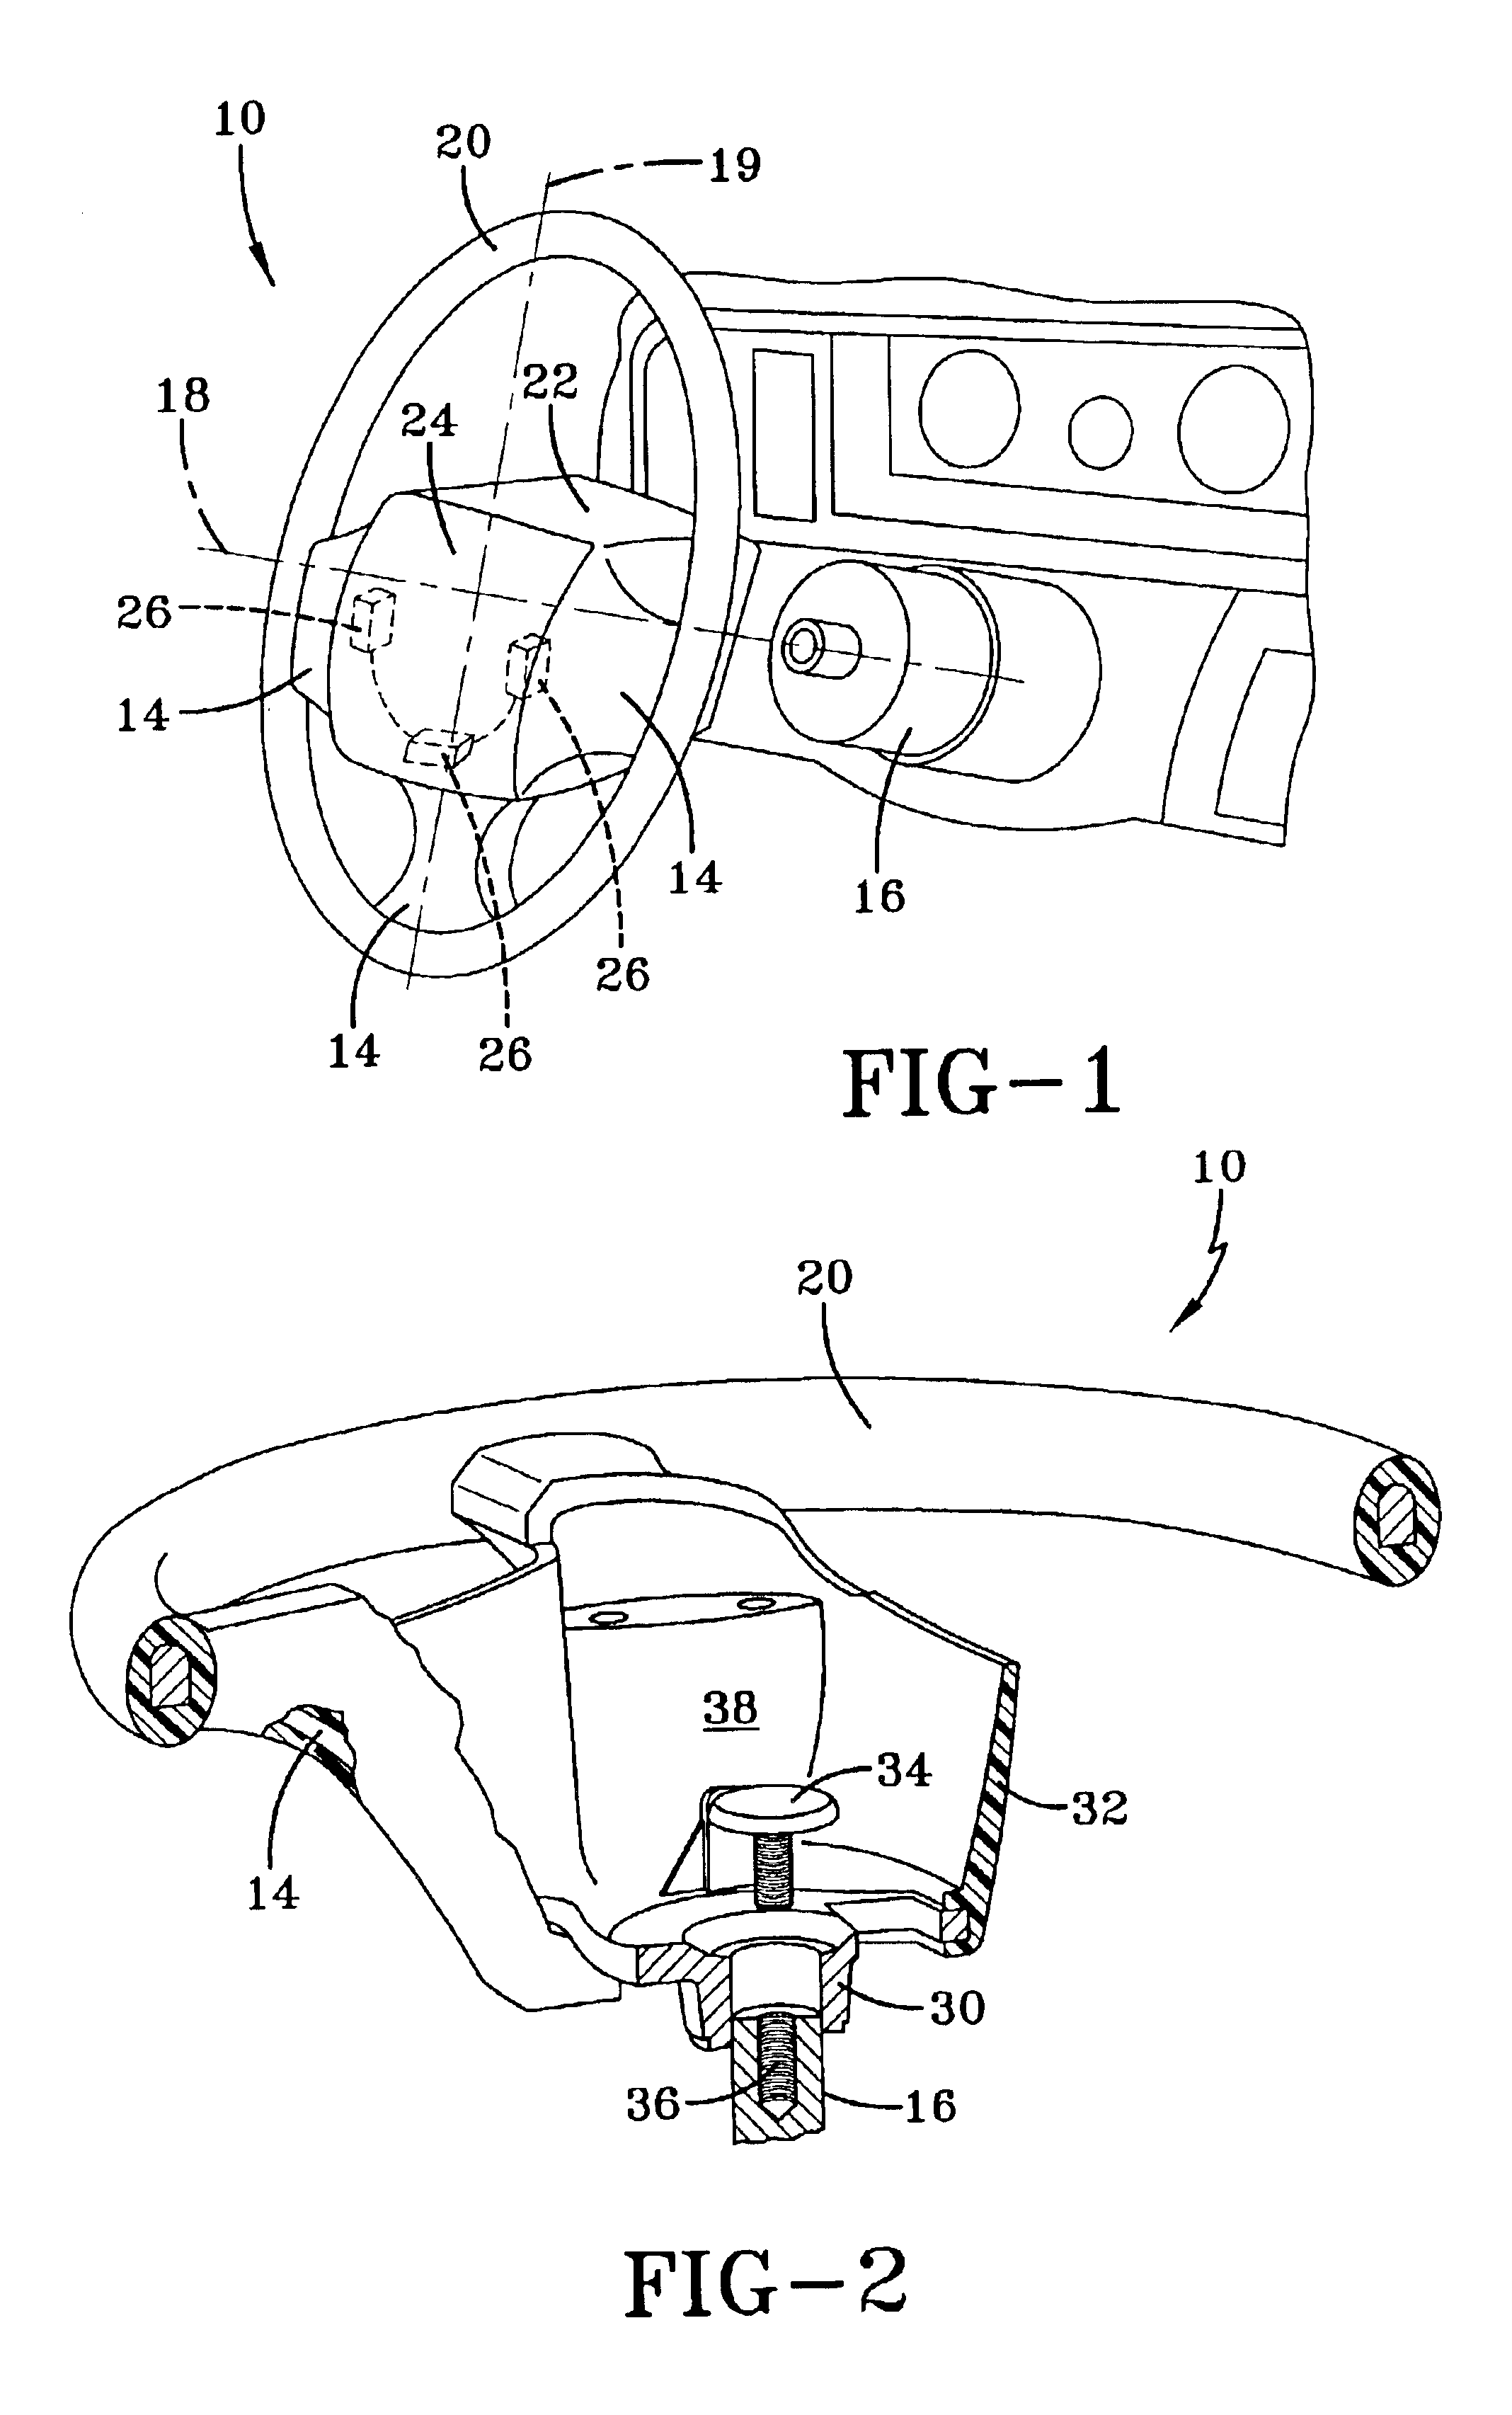 Airbag module attachment arrangement